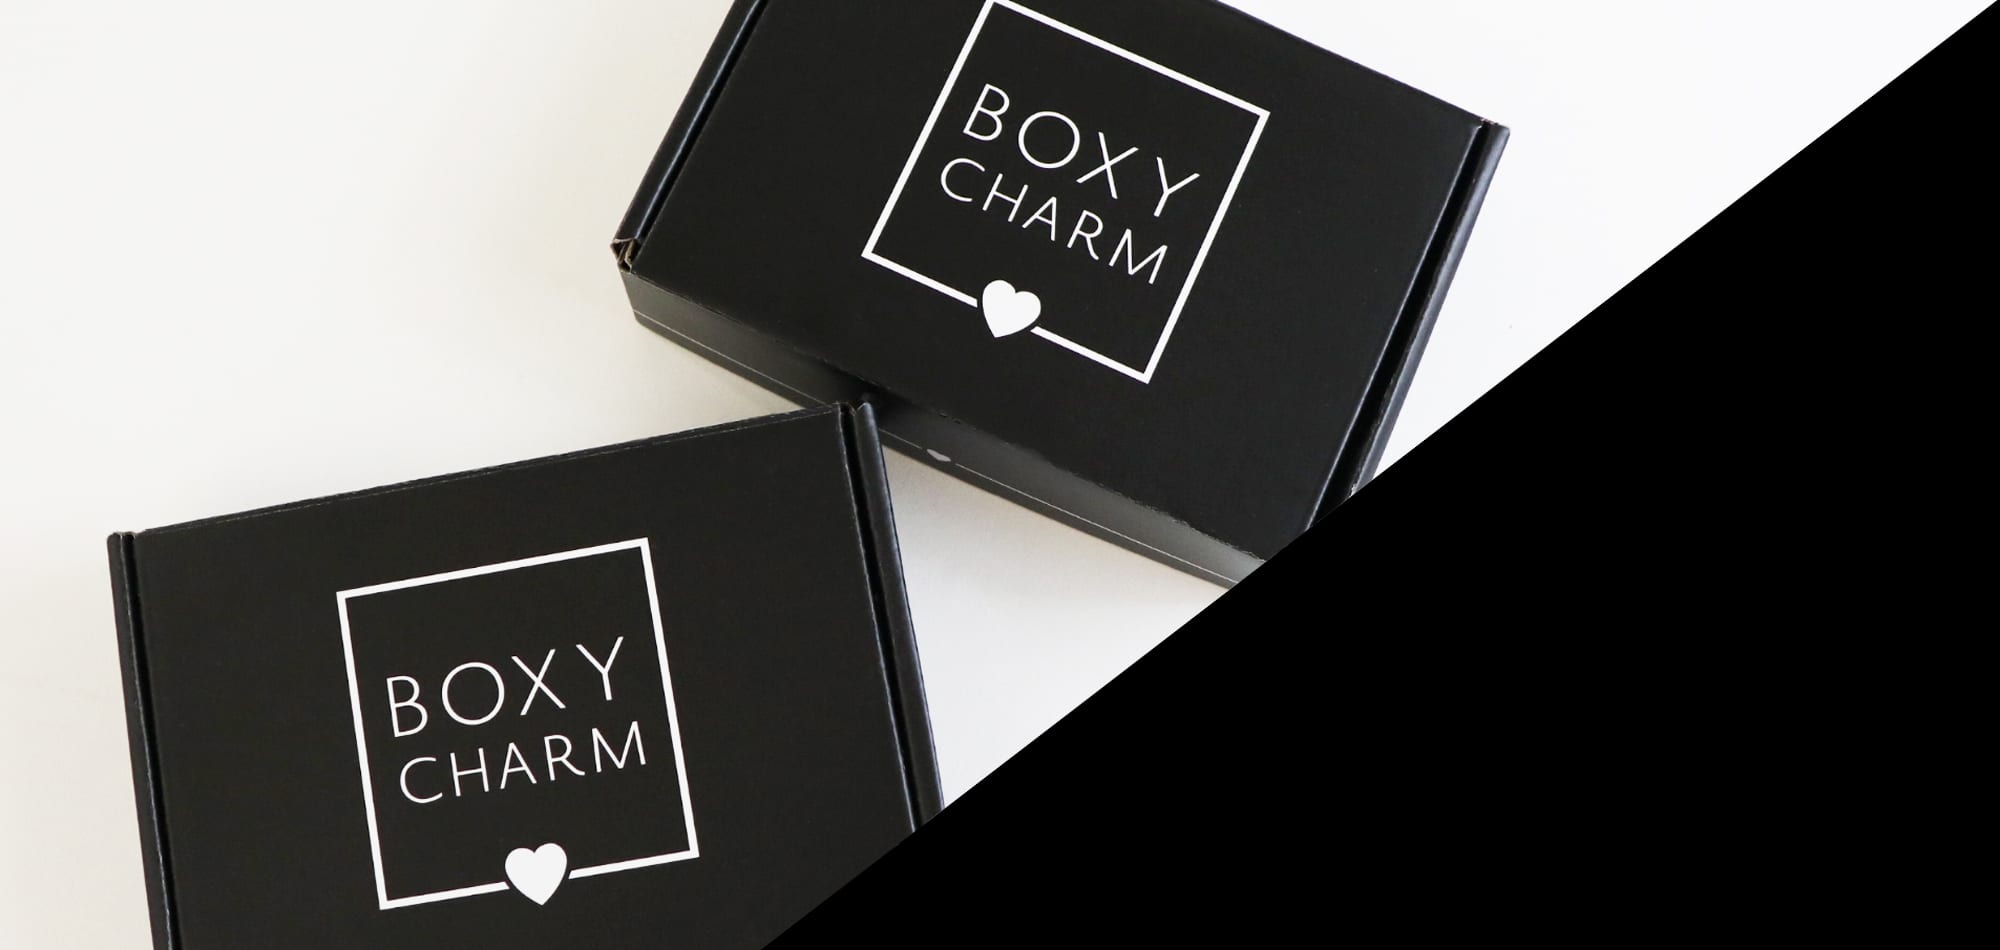 Boxy Charm boxes